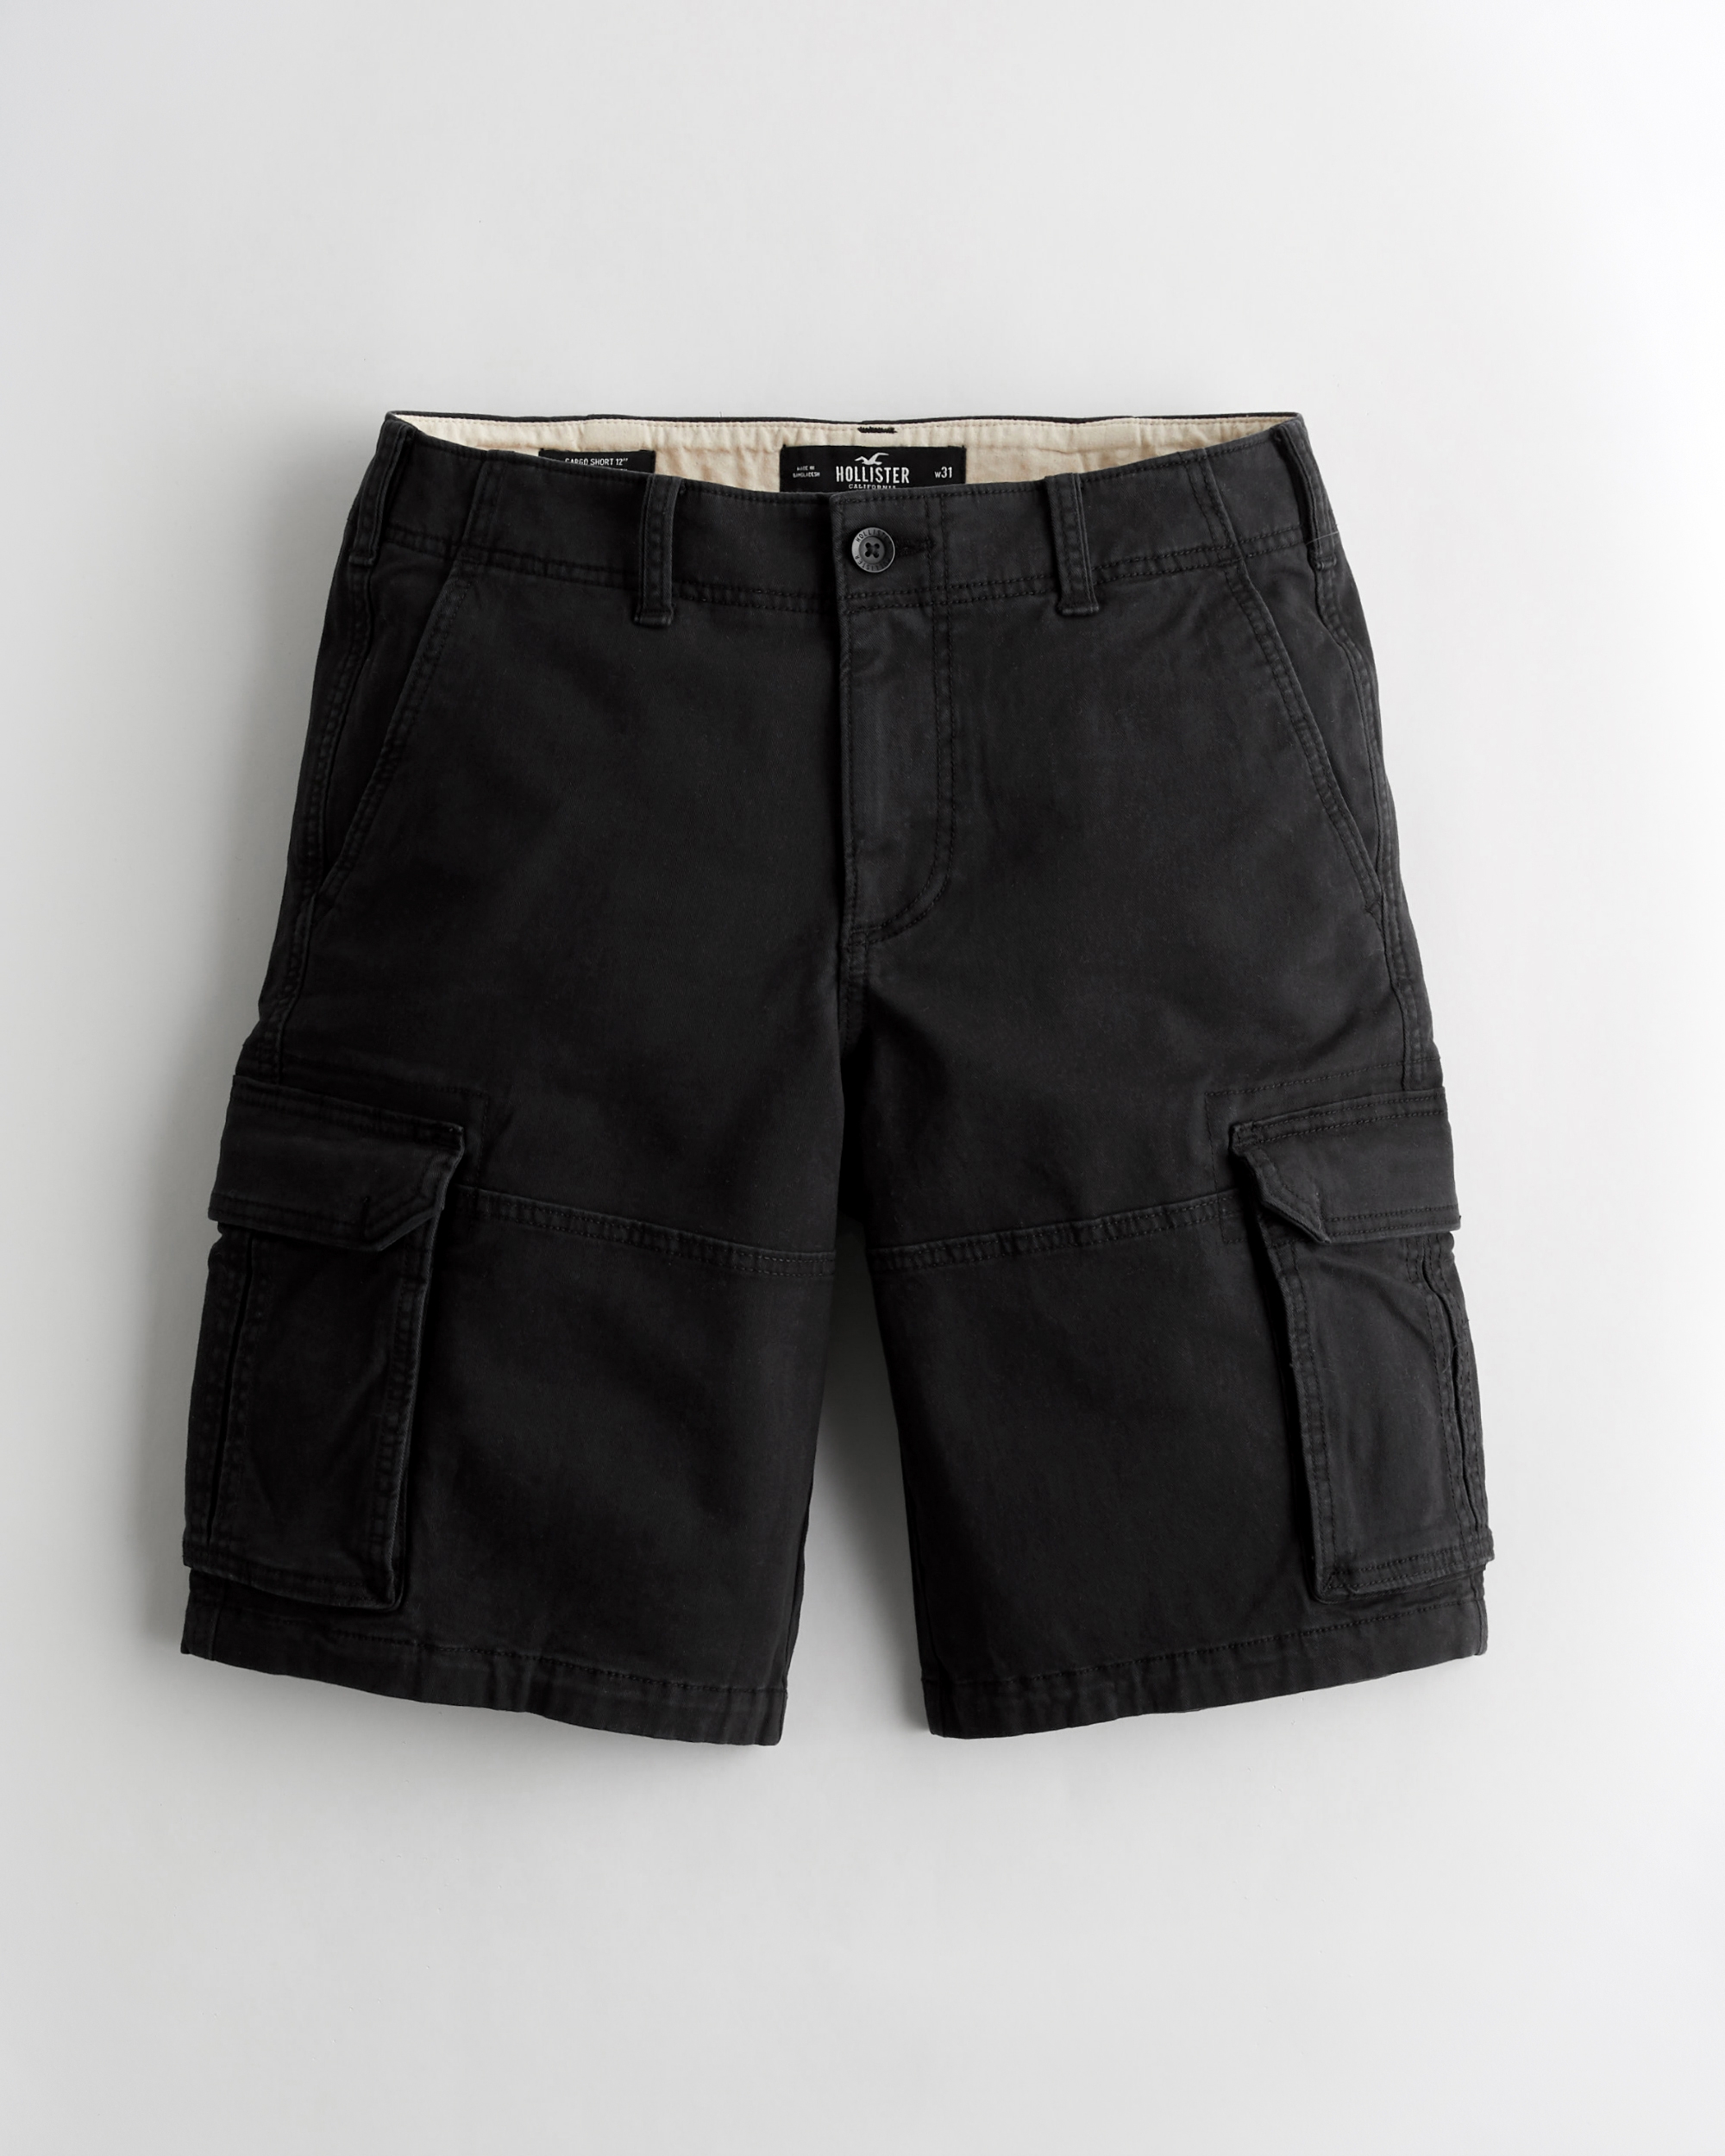 hollister cargo shorts